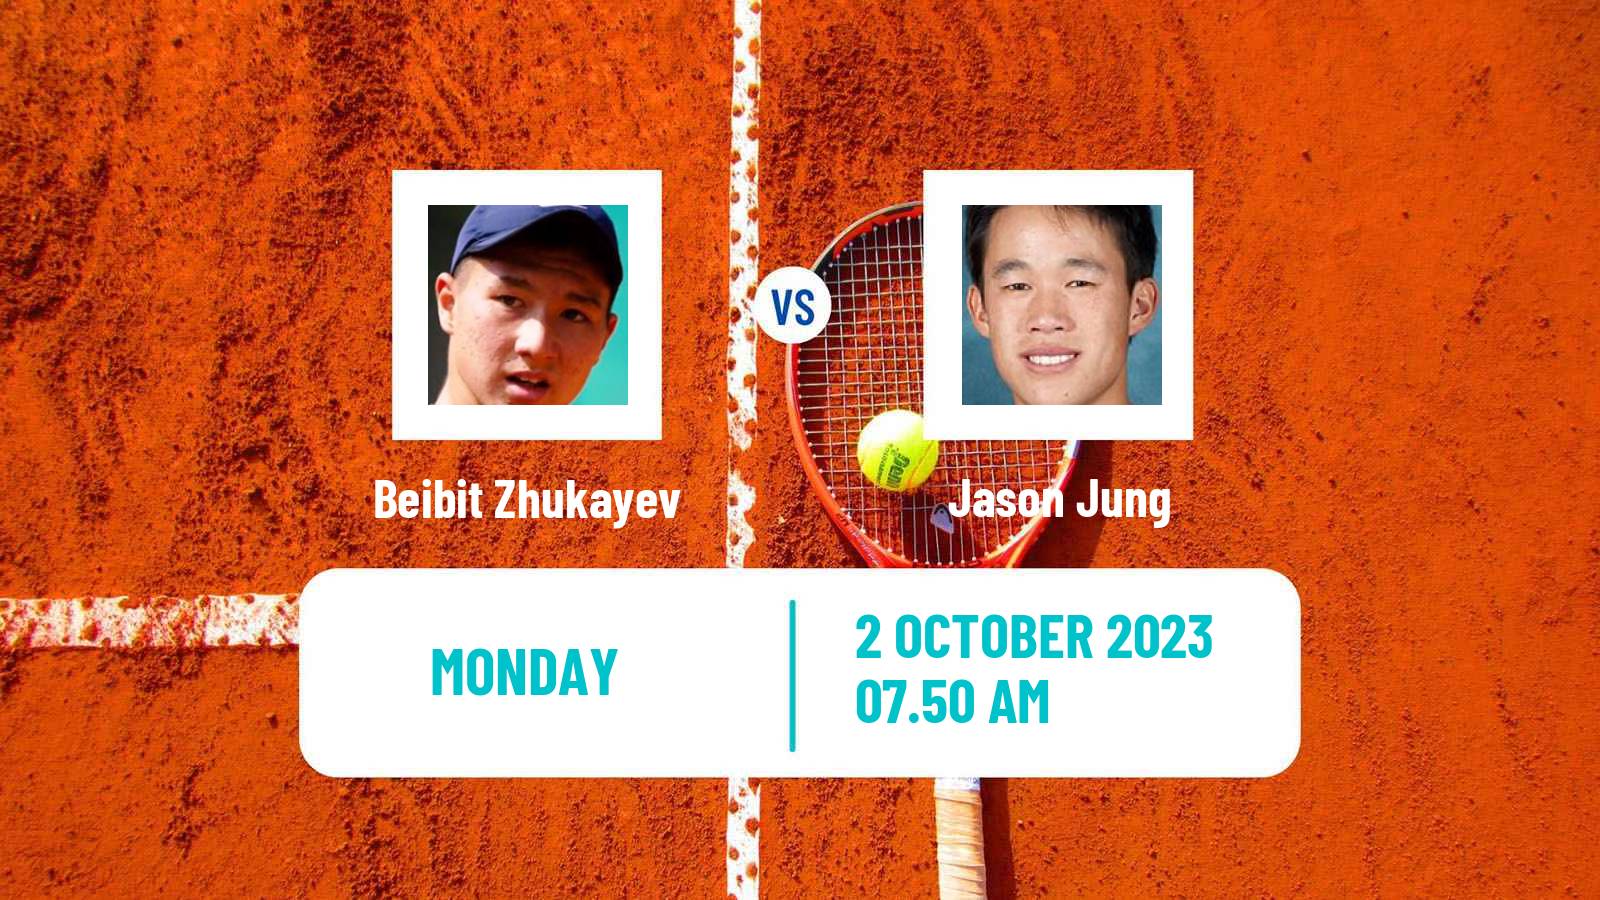 Tennis ATP Shanghai Beibit Zhukayev - Jason Jung